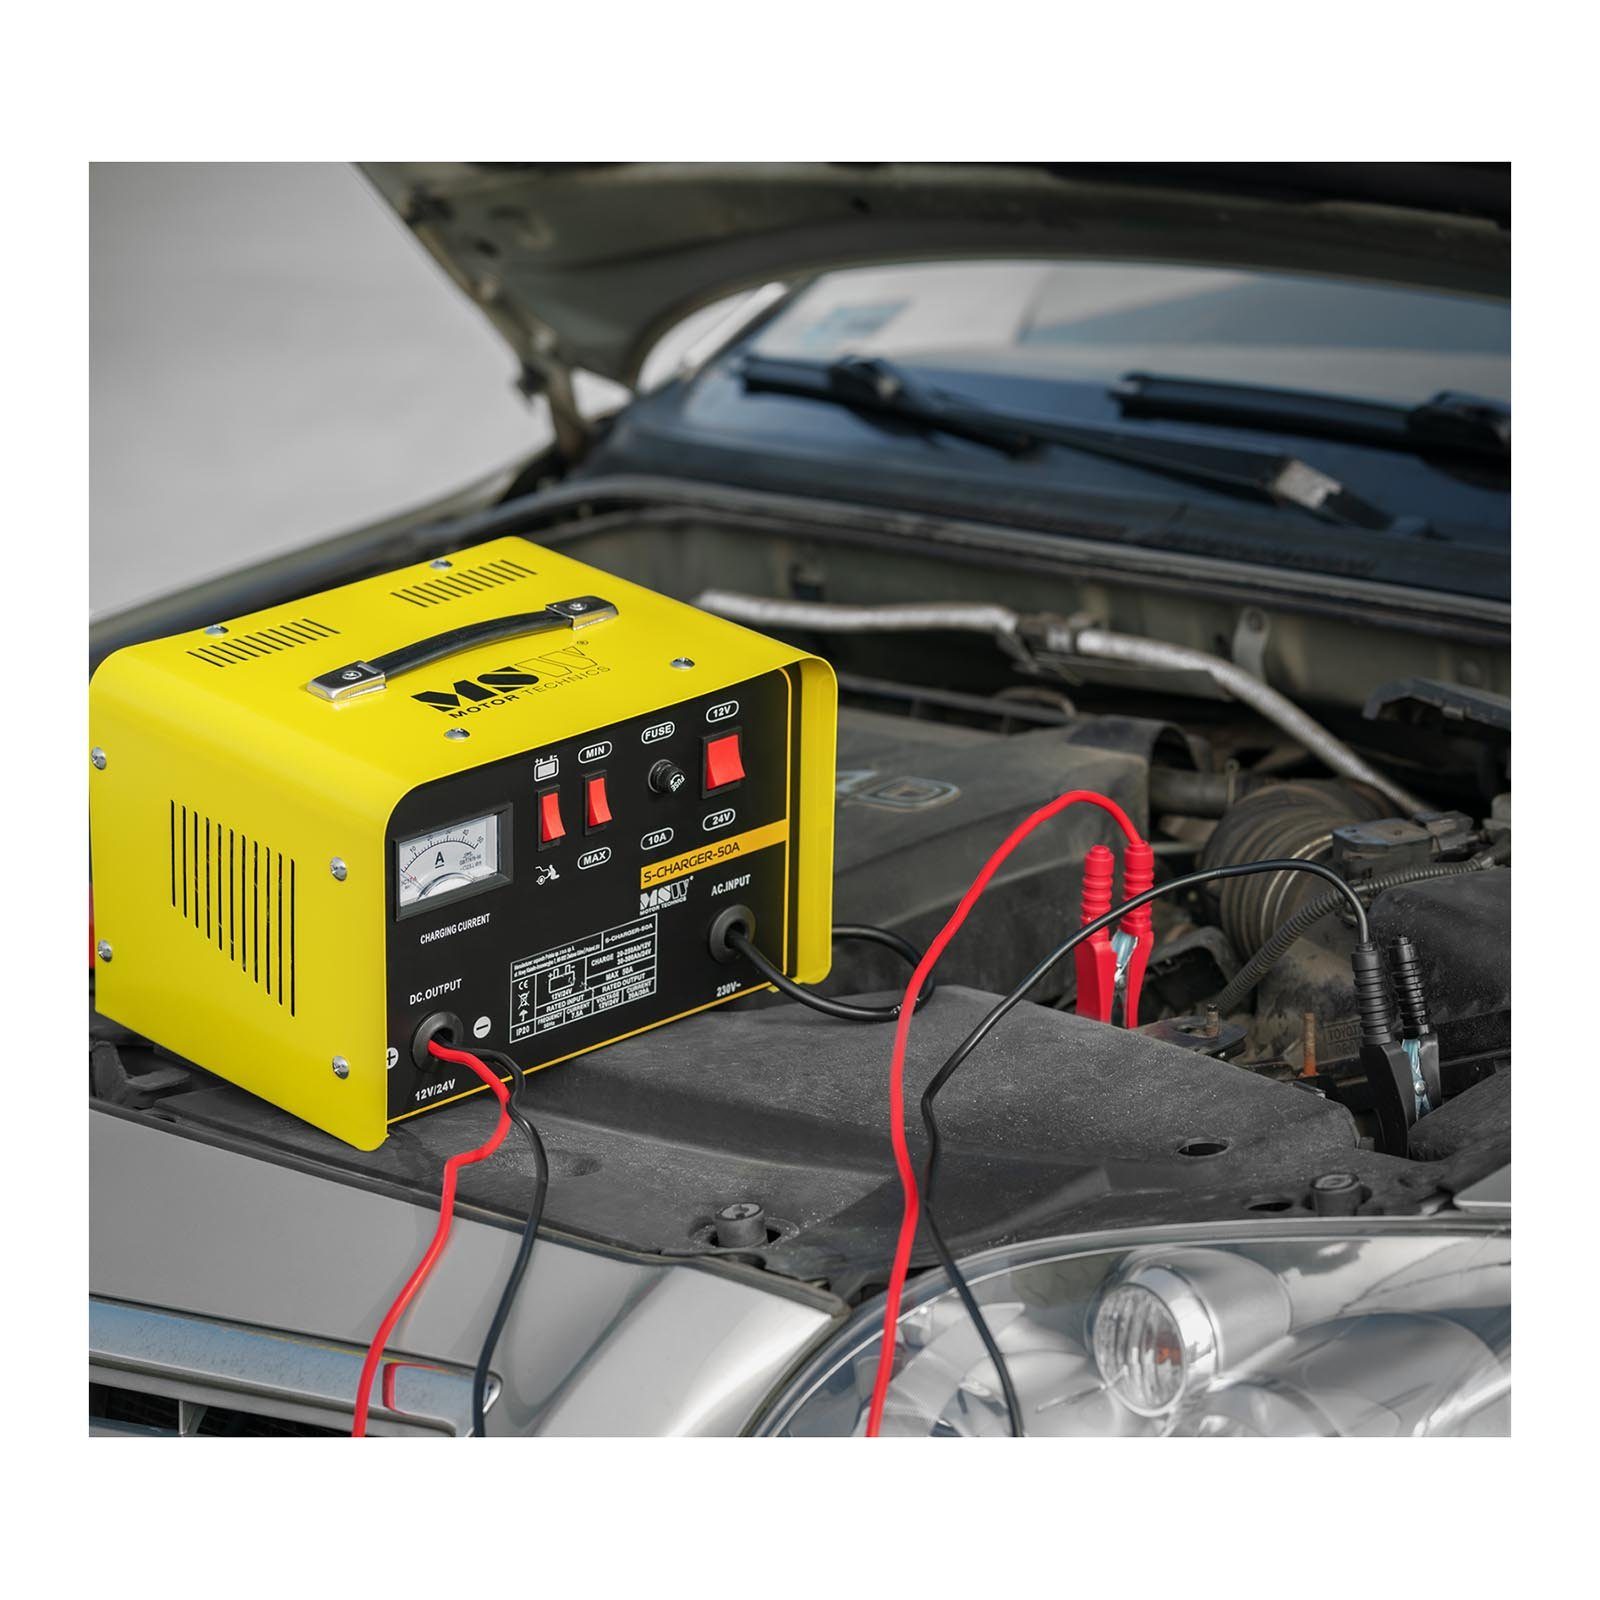 MSW Autobatterie Ladegerät 12 12V 24 Autobatterie-Ladegerät Ladegerät Kfz Pkw Batterie Starthilfe